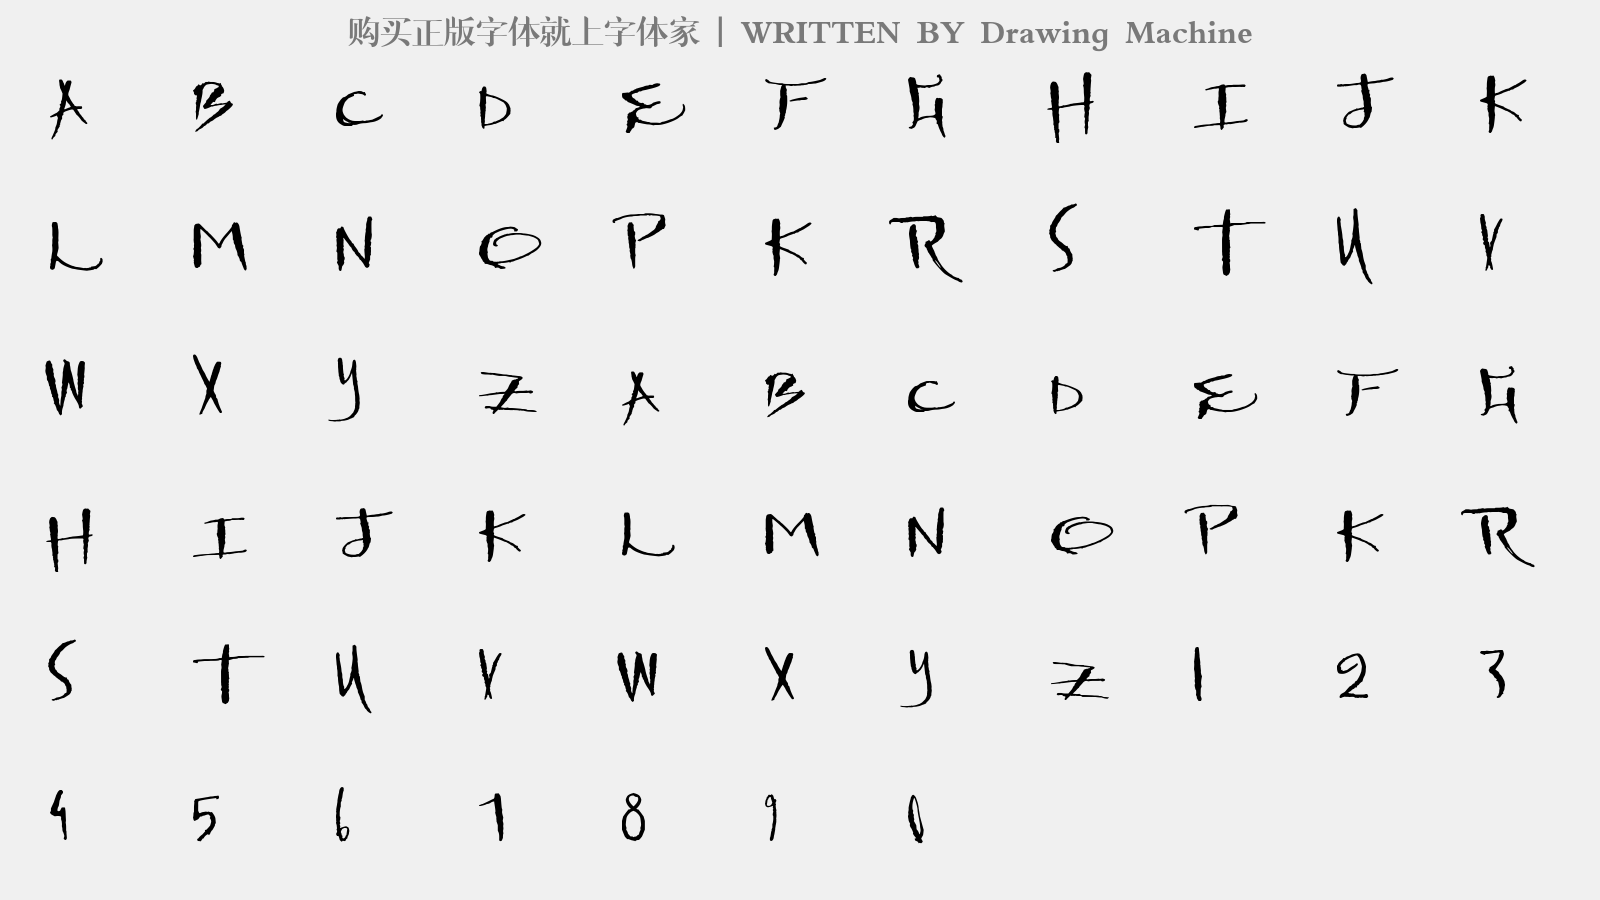 Drawing Machine - 大写字母/小写字母/数字